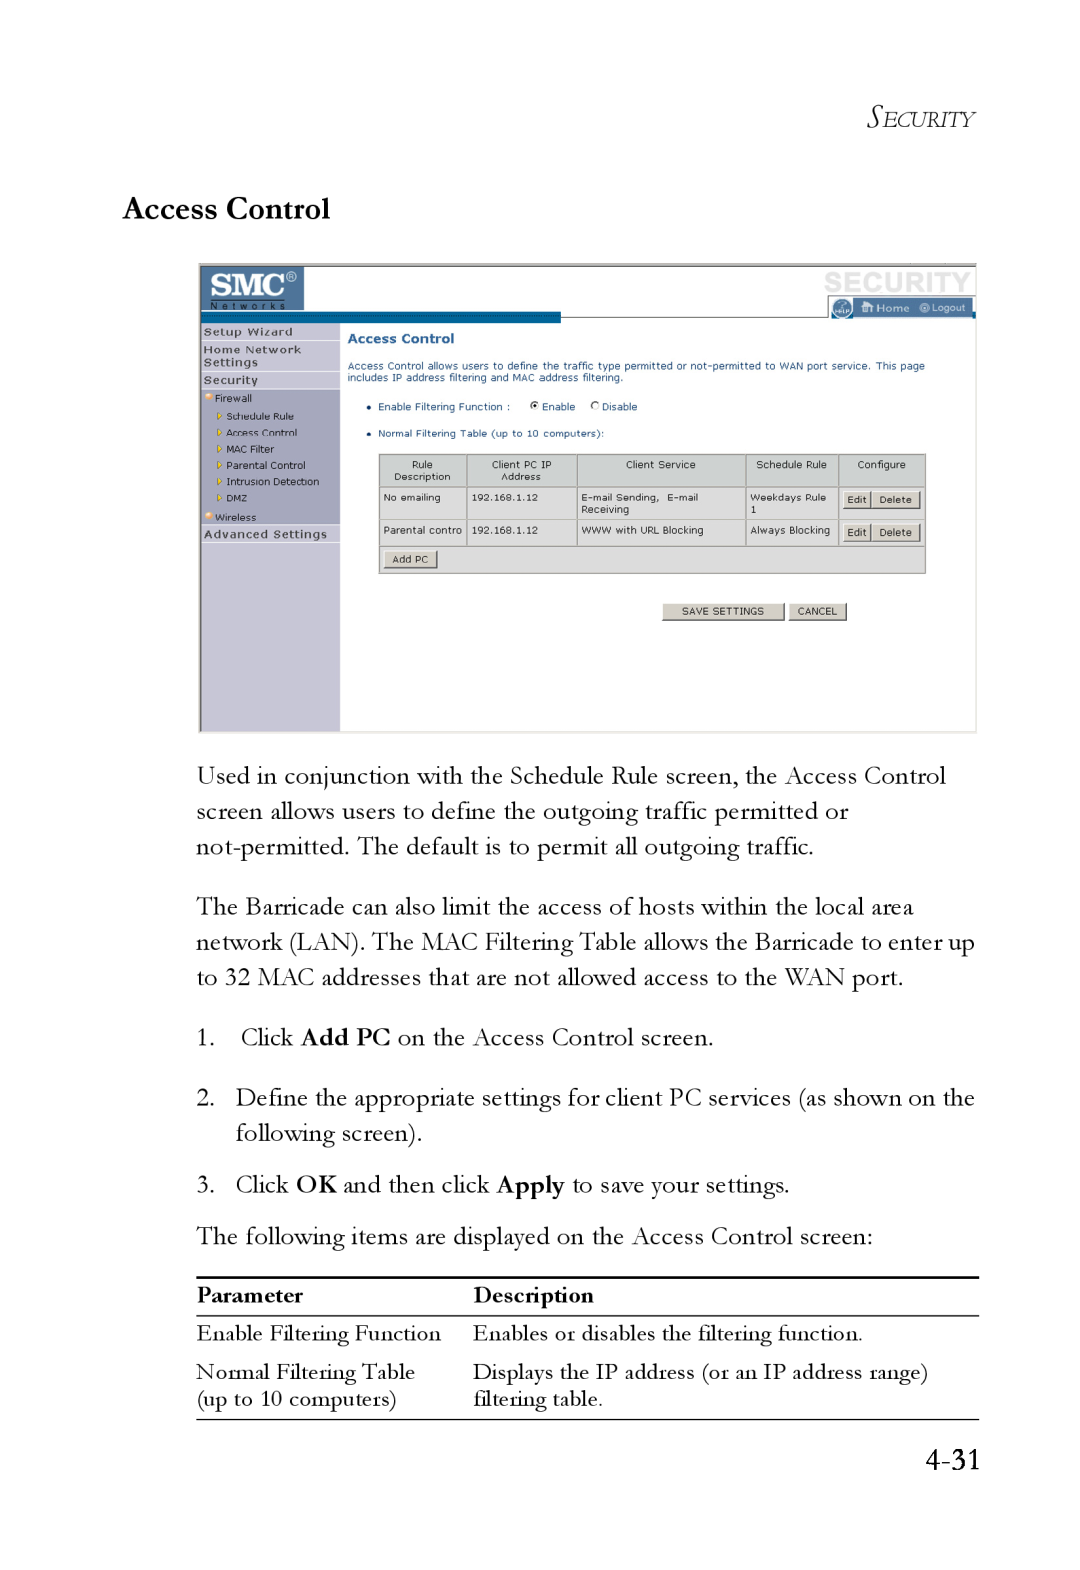 SMC Networks SMCWBR14T-G manual 4-31, Access Control 